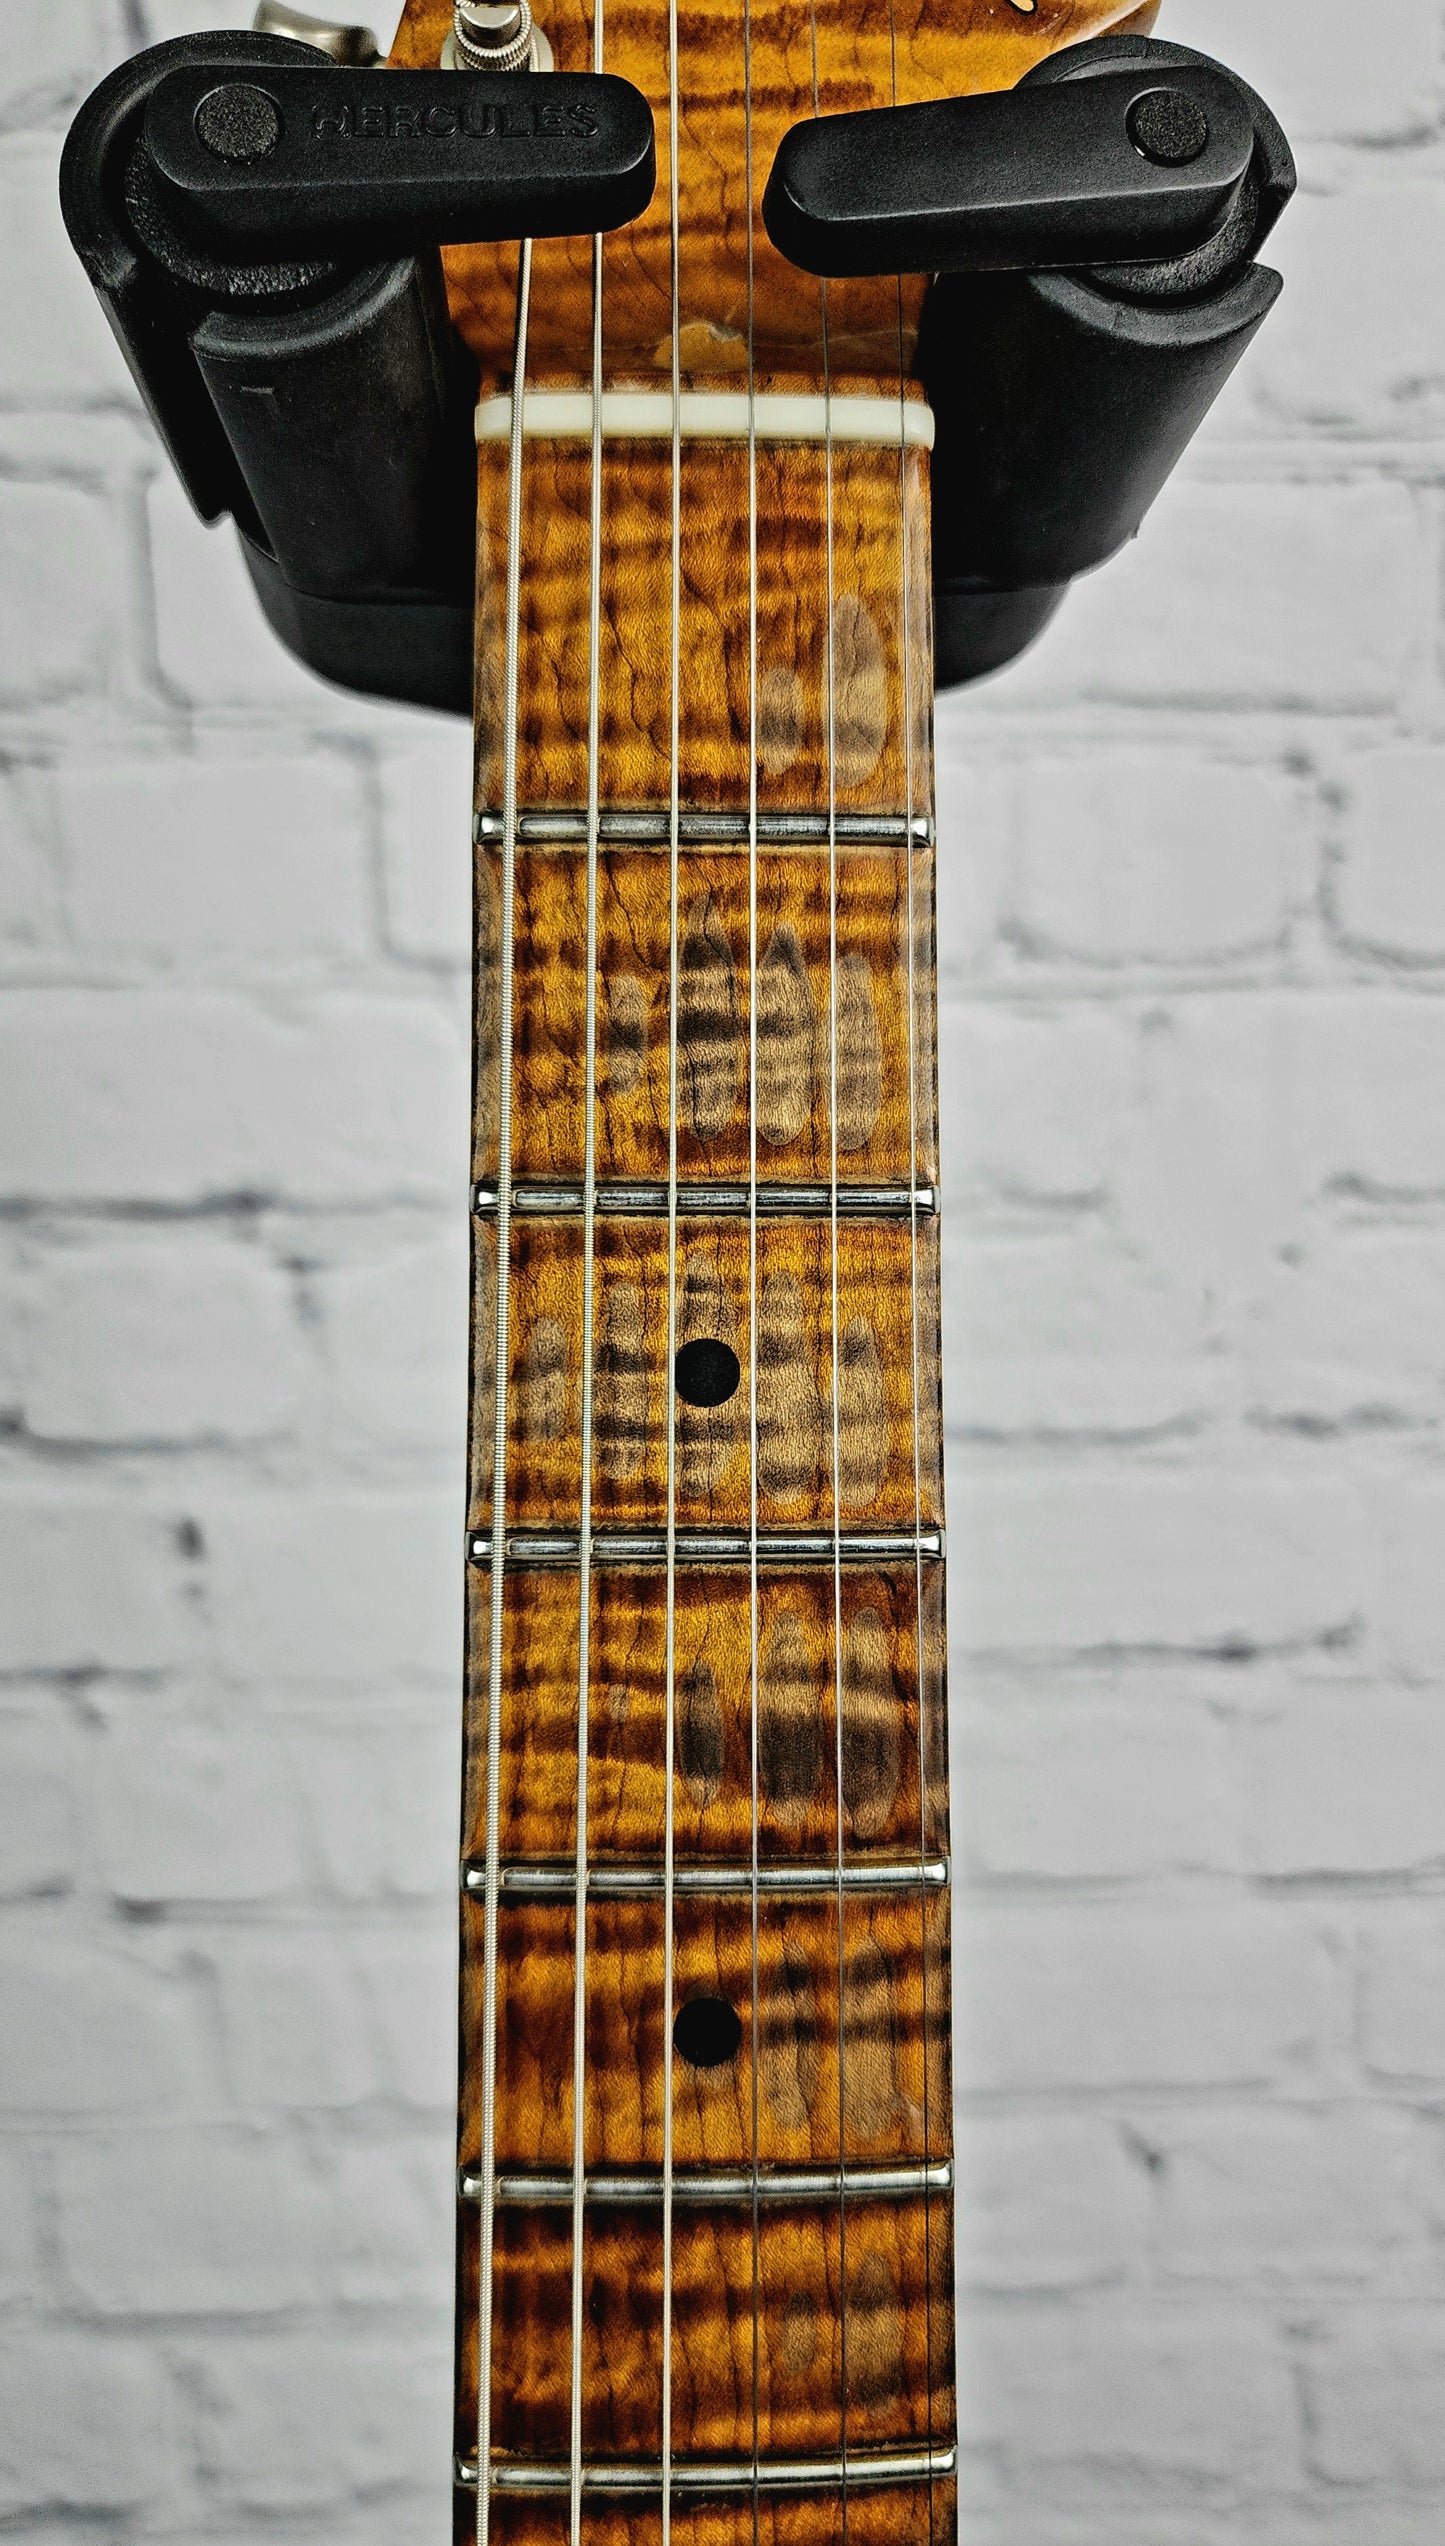 USED Fender Custom Shop Stratocaster Tomatillo 4A Roasted Flame Maple Neck Sunburst